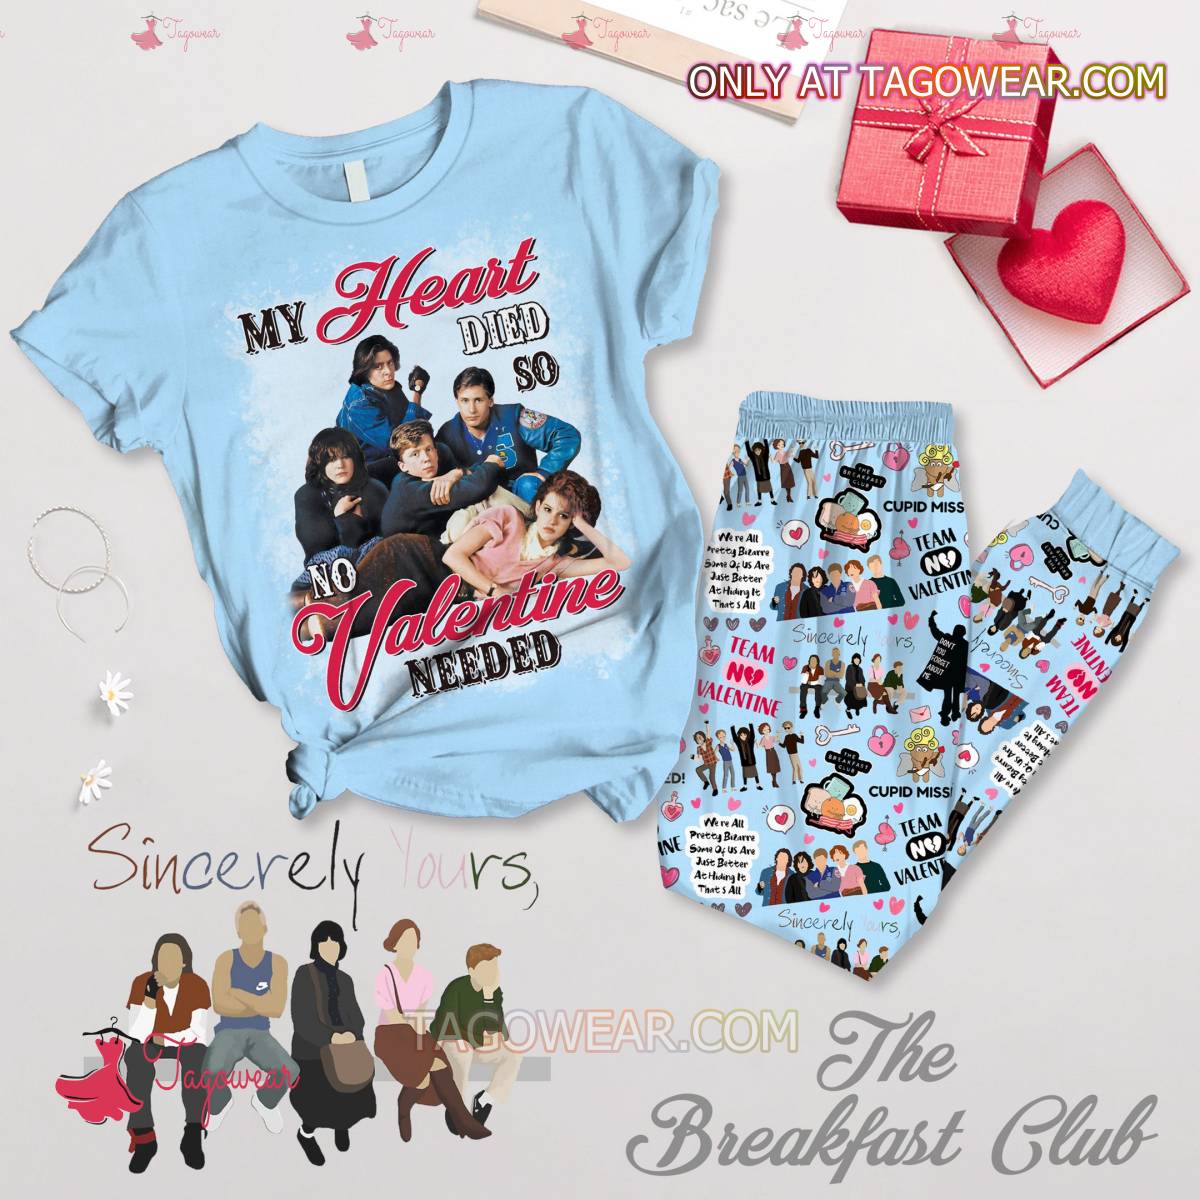 The Breakfast Club My Heart Died So No Valentine Needed Pajamas Set